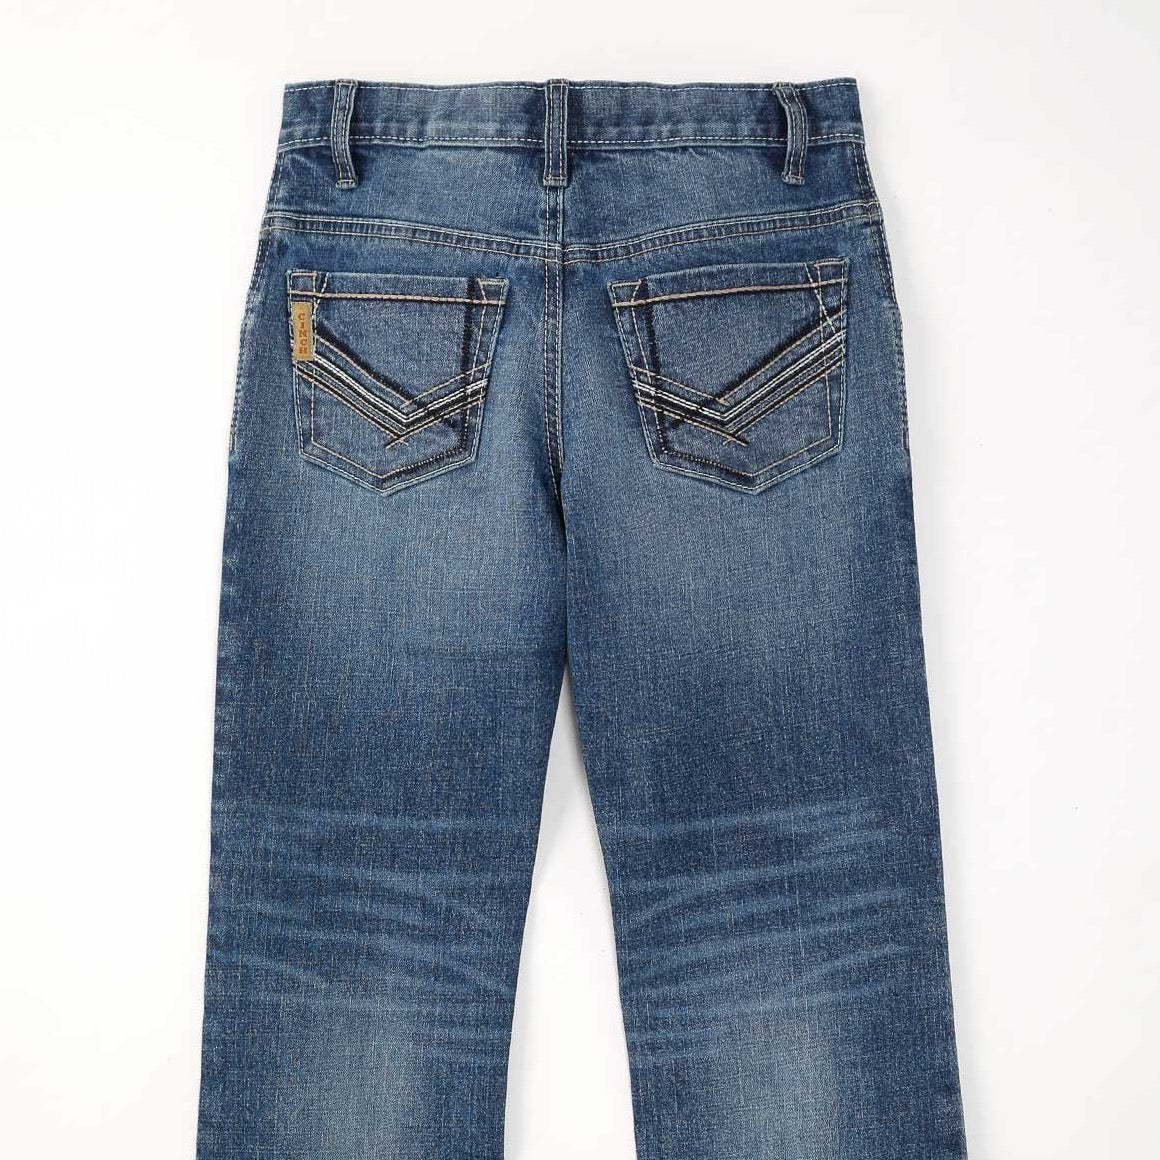 Cinch Boys Relaxed Fit Jeans- Medium Stonewash